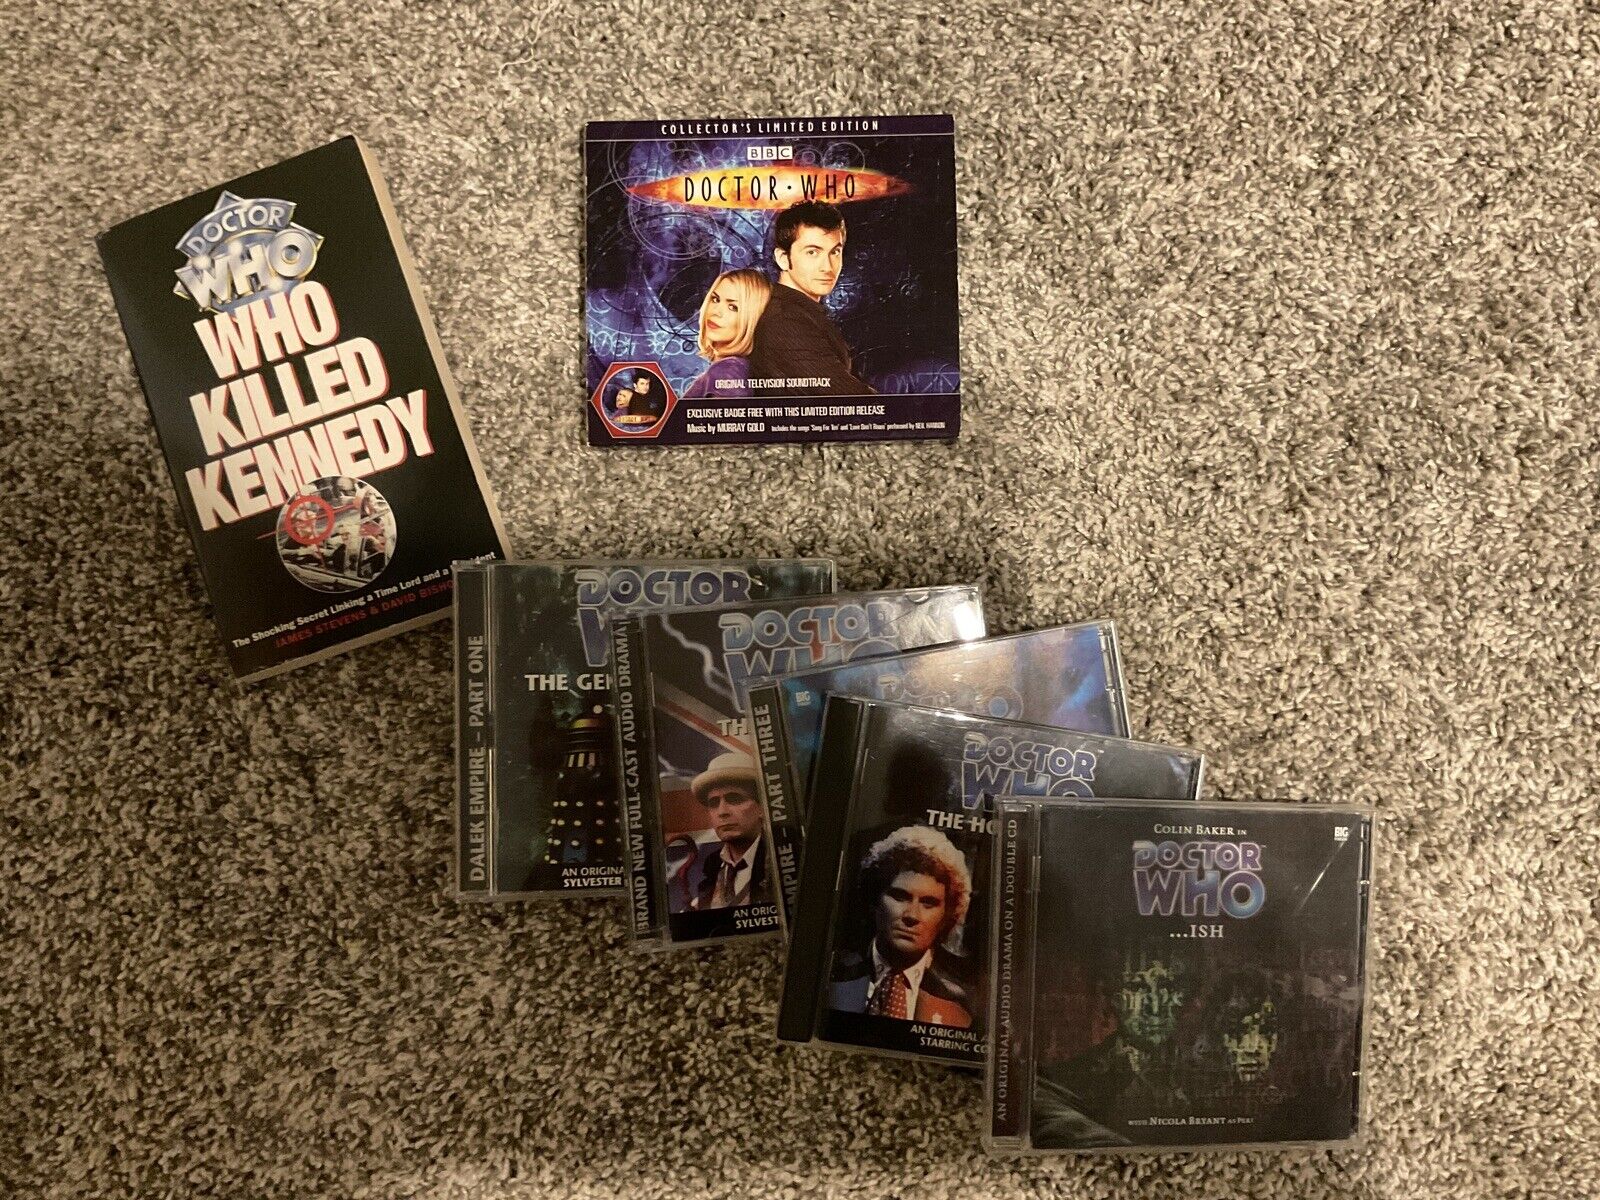 Lot of Doctor Who merchandise